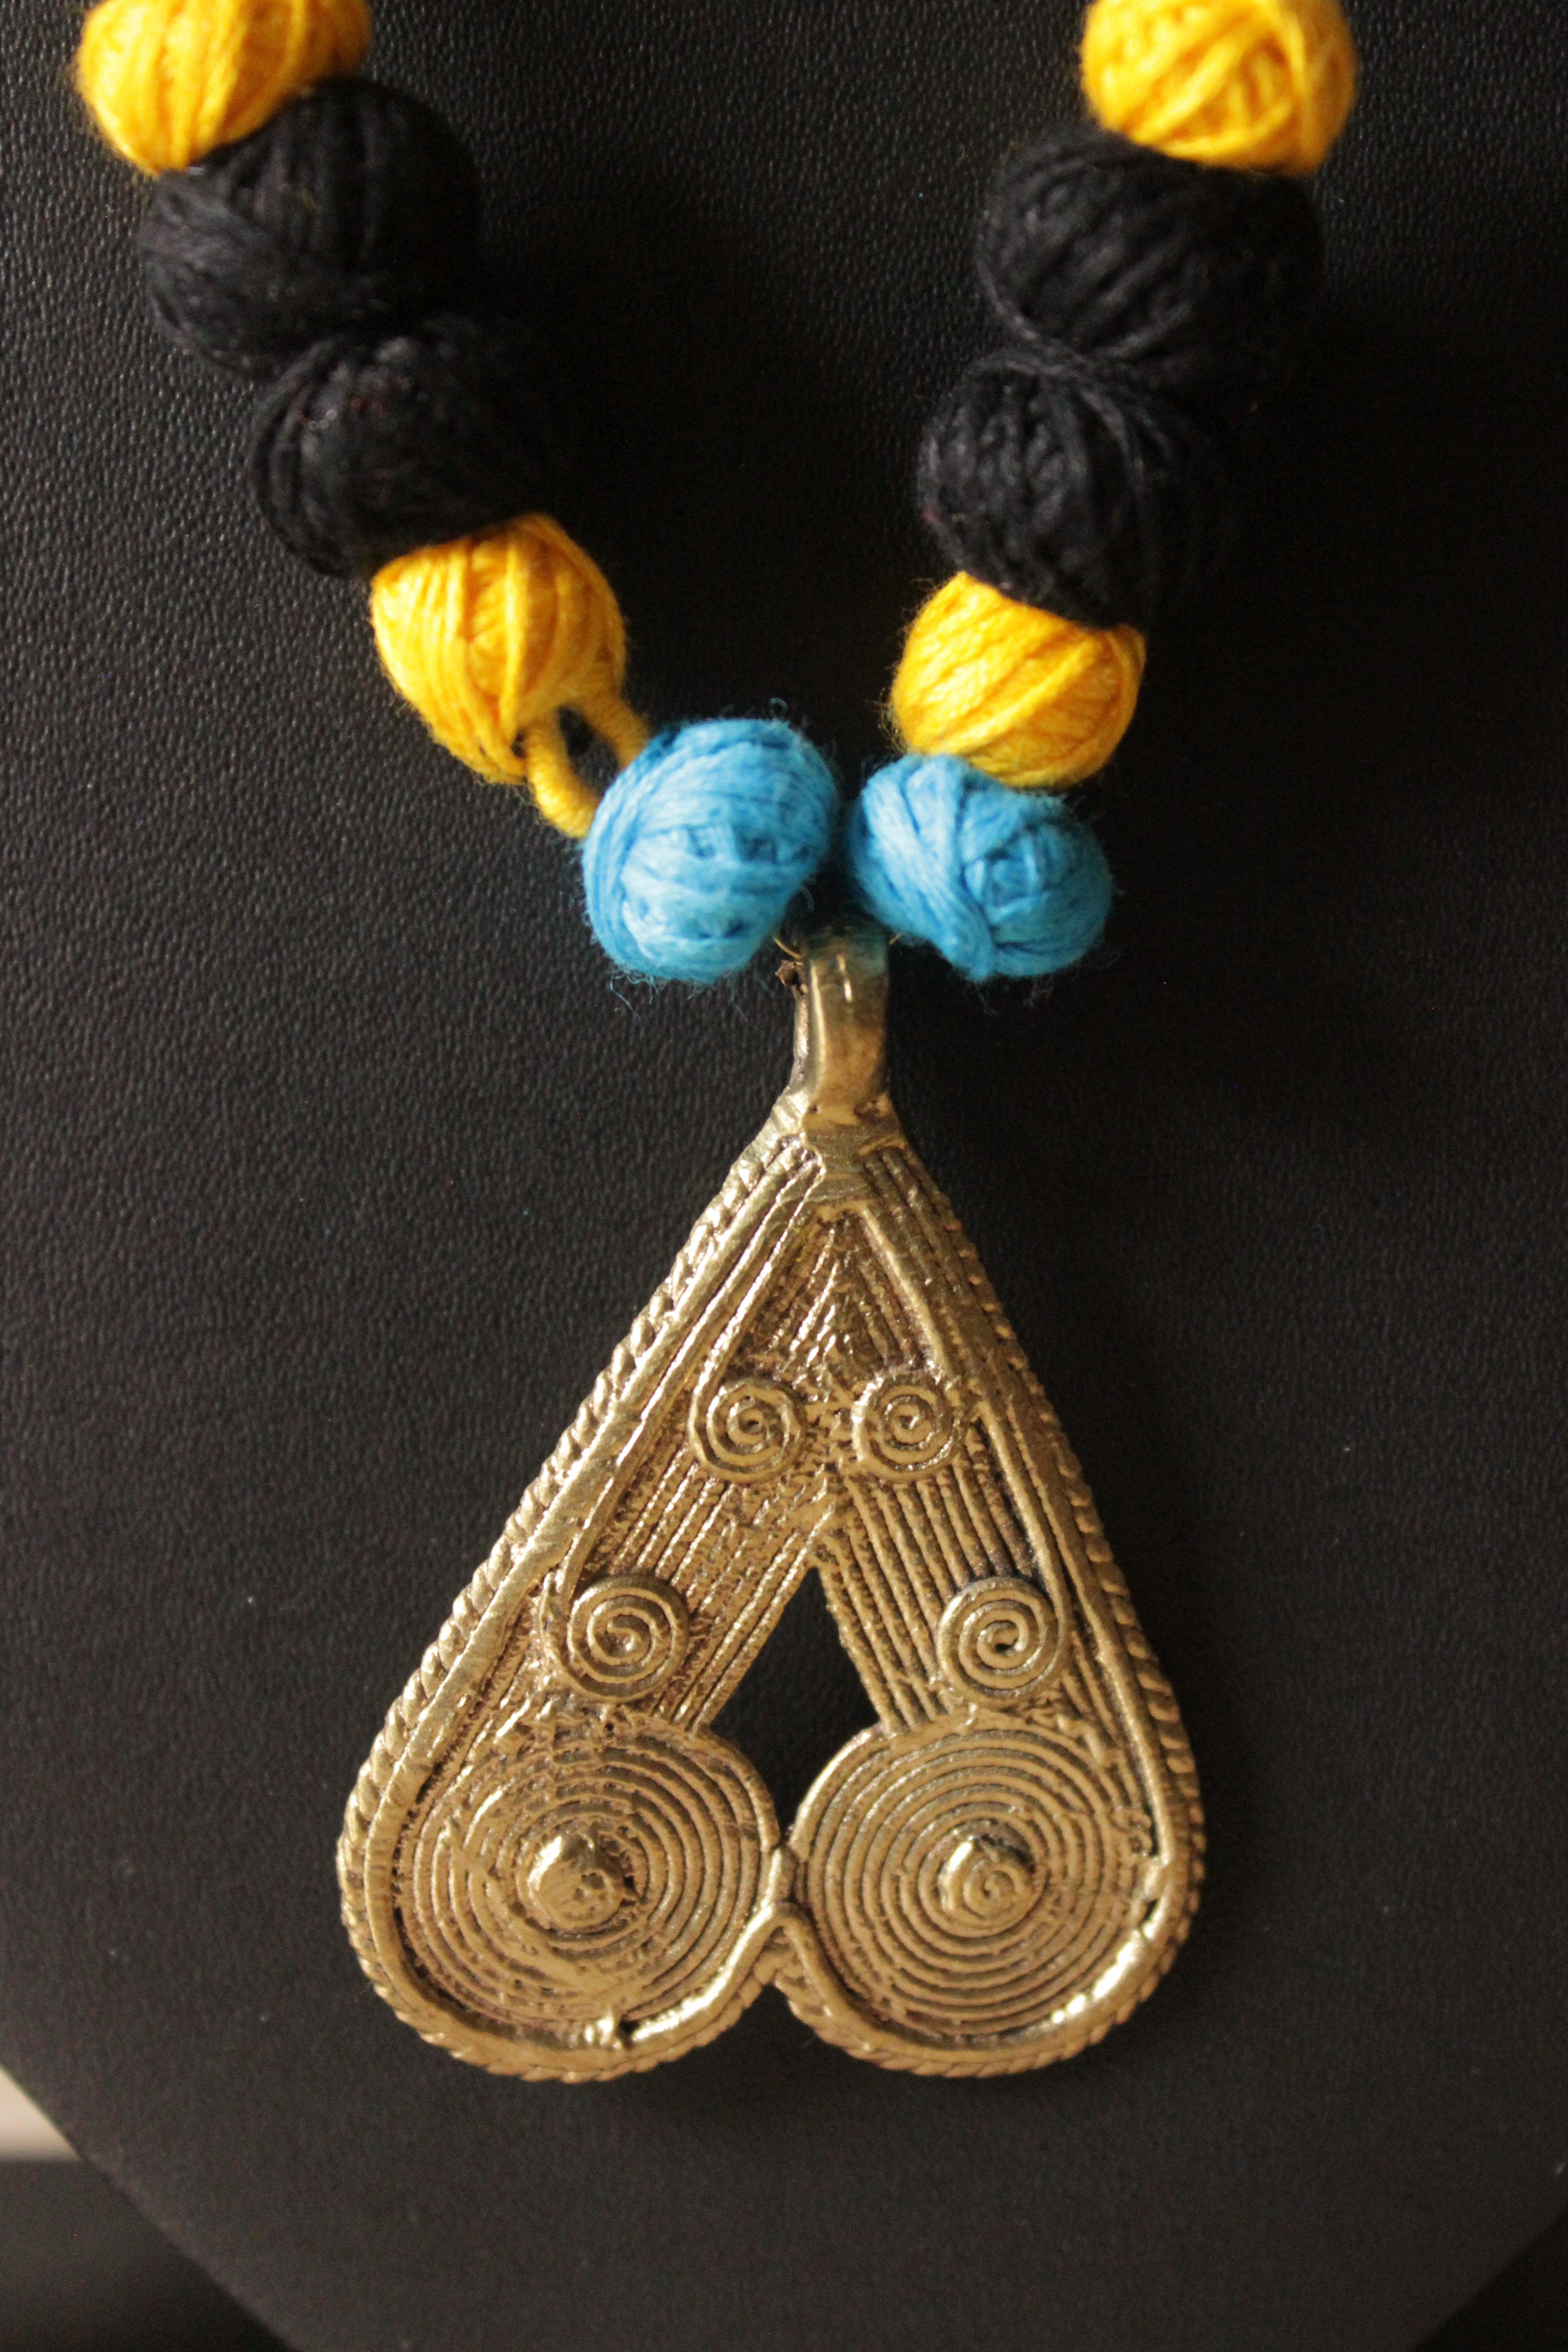 Fabric Beads Embellished Dhokra Pendant Handcrafted Necklace Set